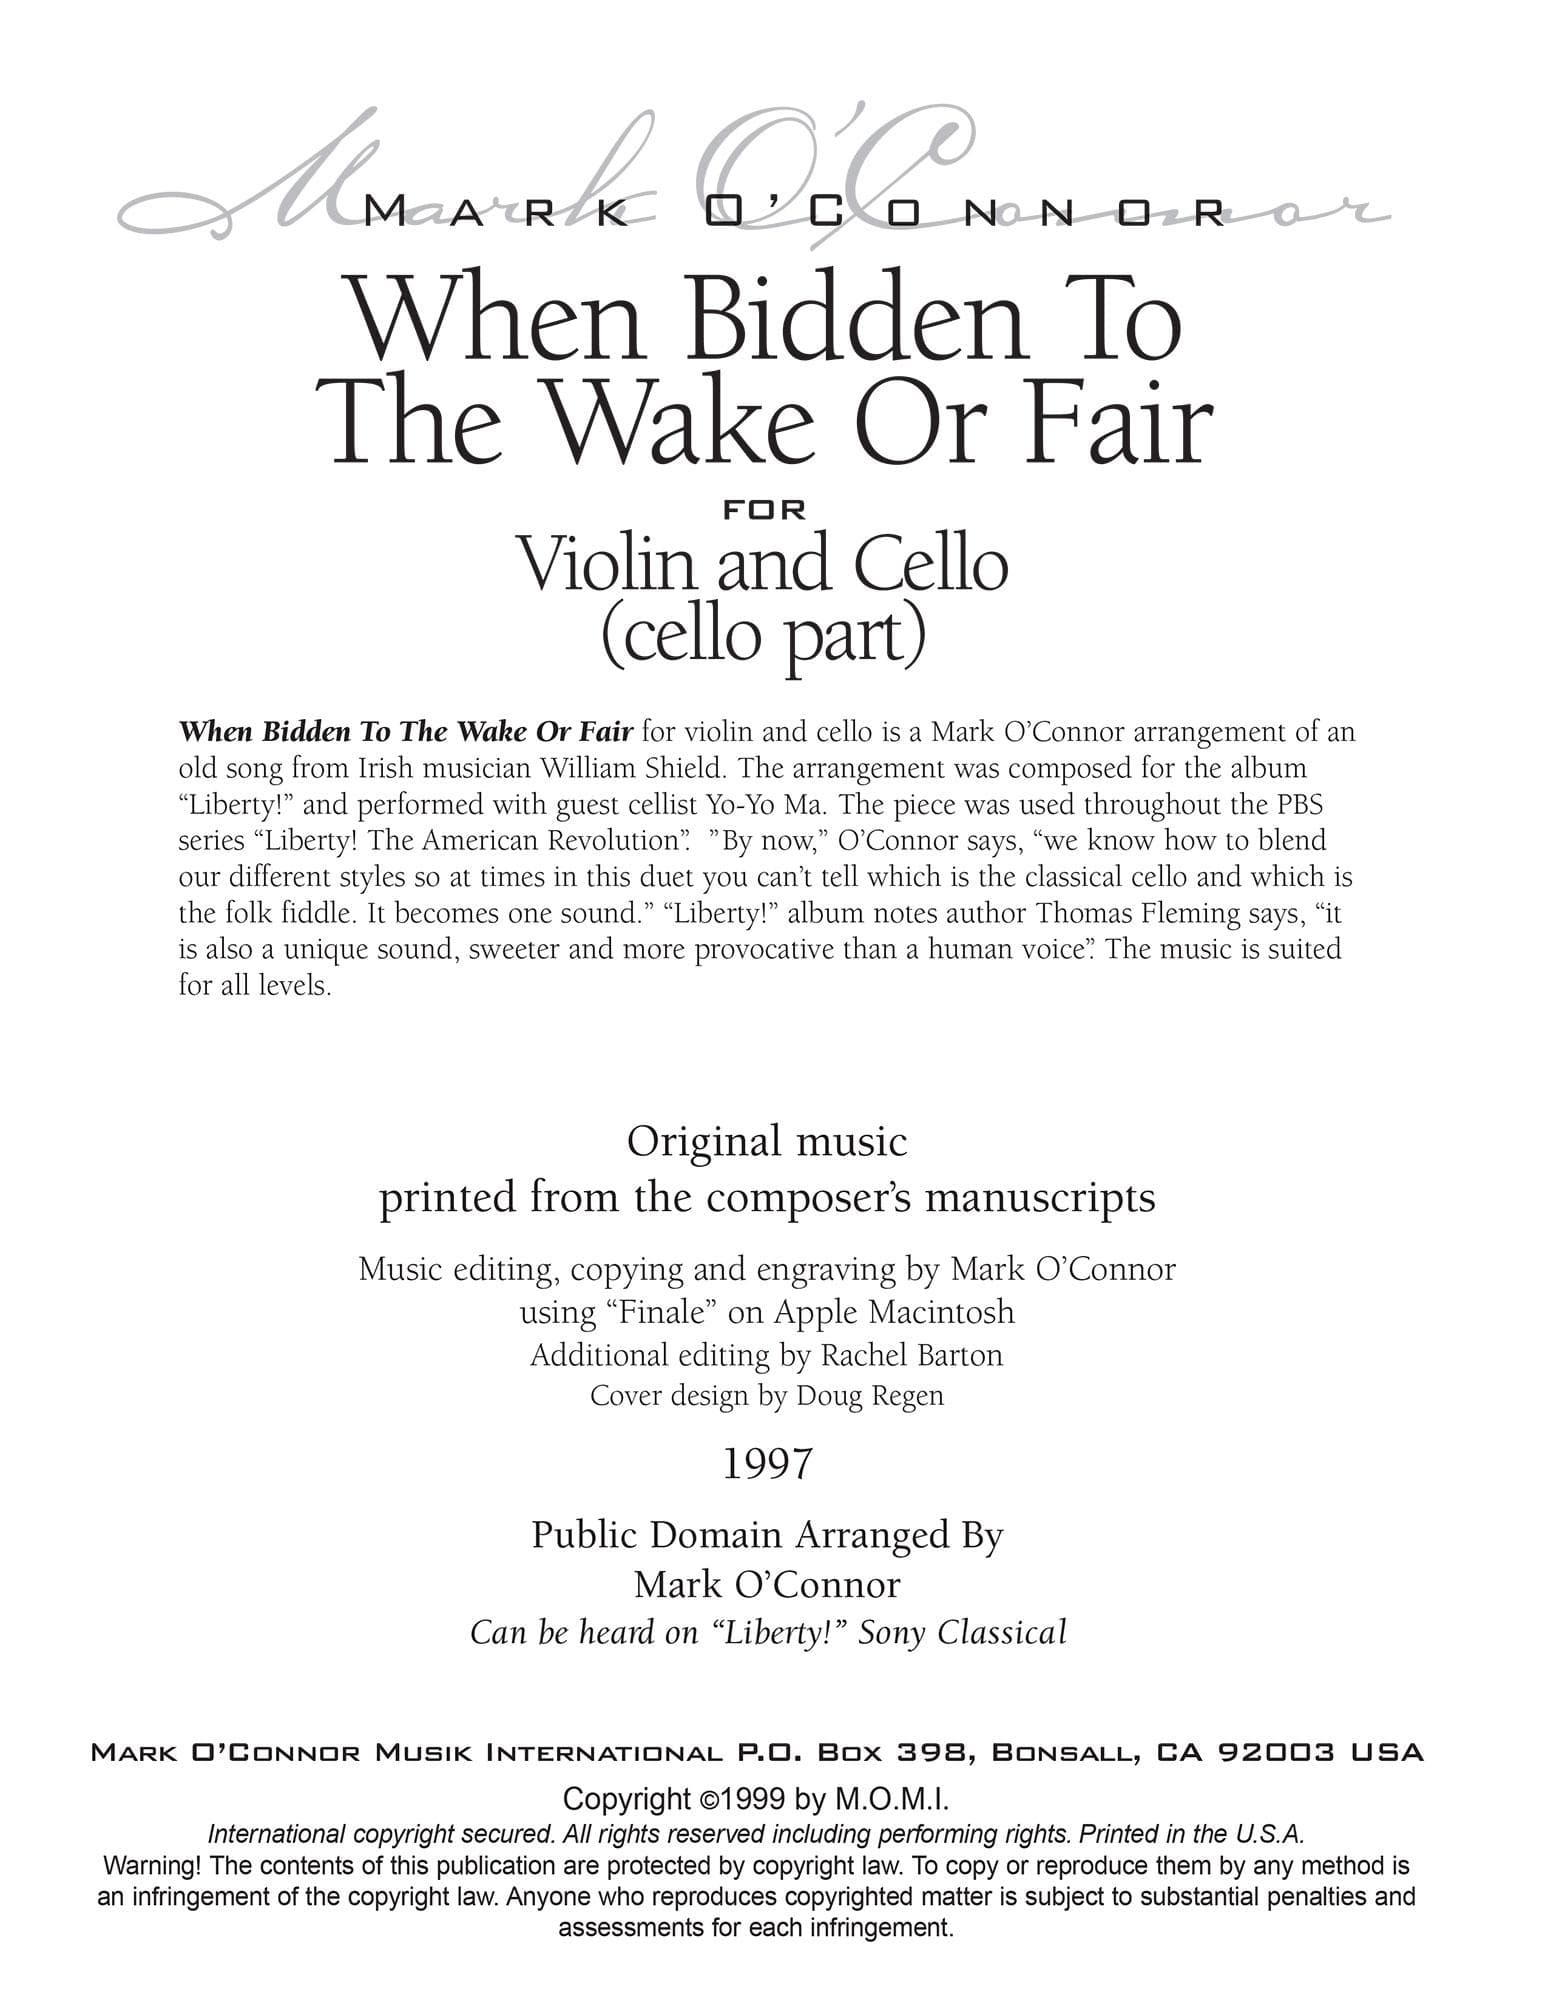 O'Connor, Mark - When Bidden To The Wake Or Fair for Violin and Cello - Cello - Digital Download